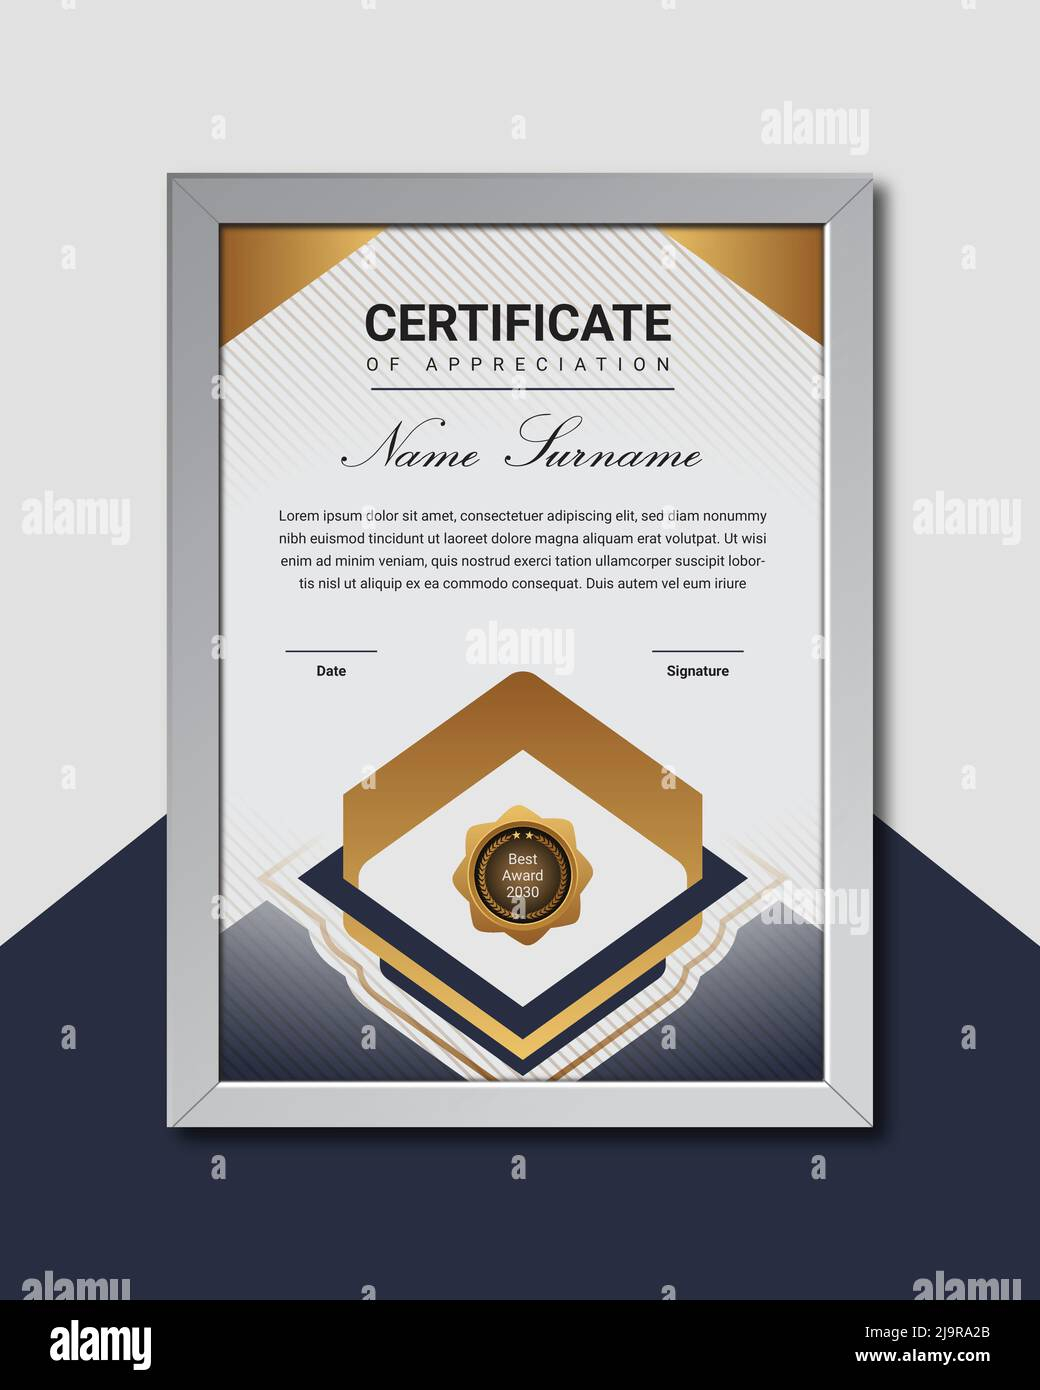 Qualification certificate template Stock-Vektorgrafiken kaufen - Alamy Pertaining To Qualification Certificate Template